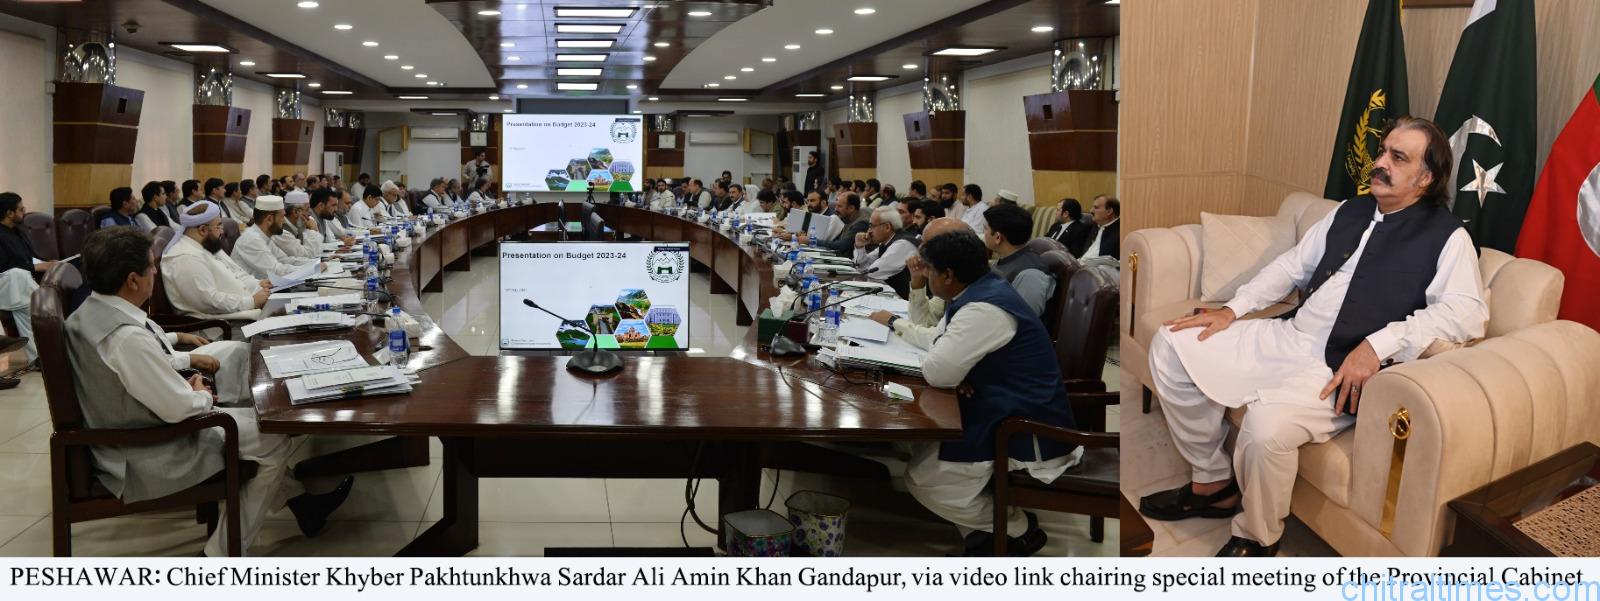 chitraltimes sardar ali amin khan gandapur chairing special meeting of kp cabinet budget